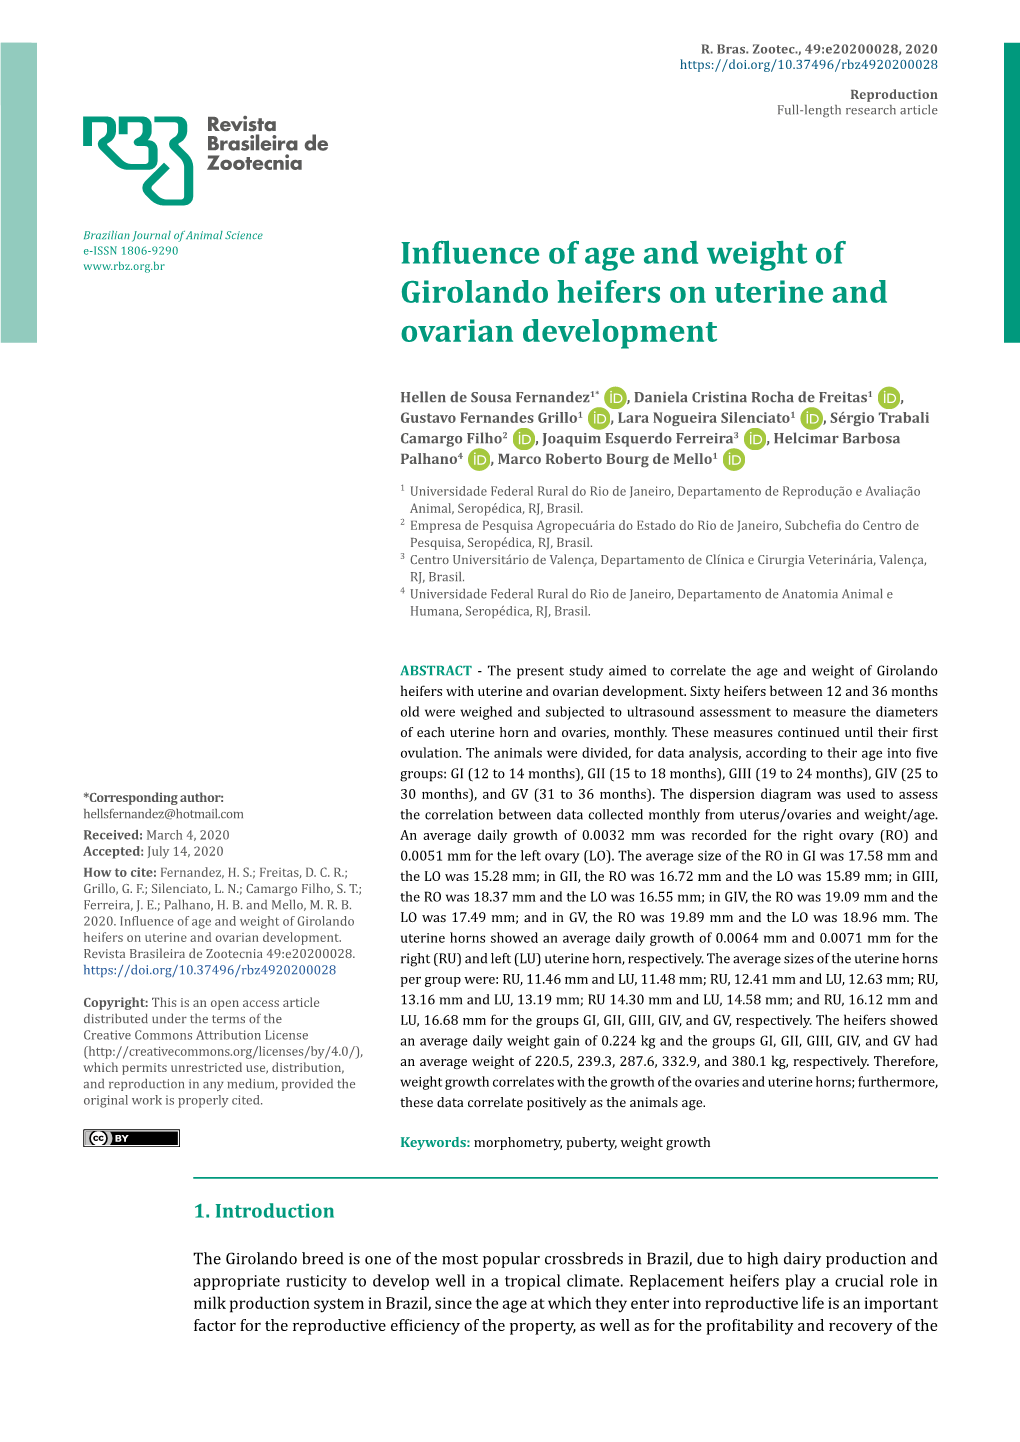 Influence of Age and Weight of Girolando Heifers on Uterine and Ovarian Development